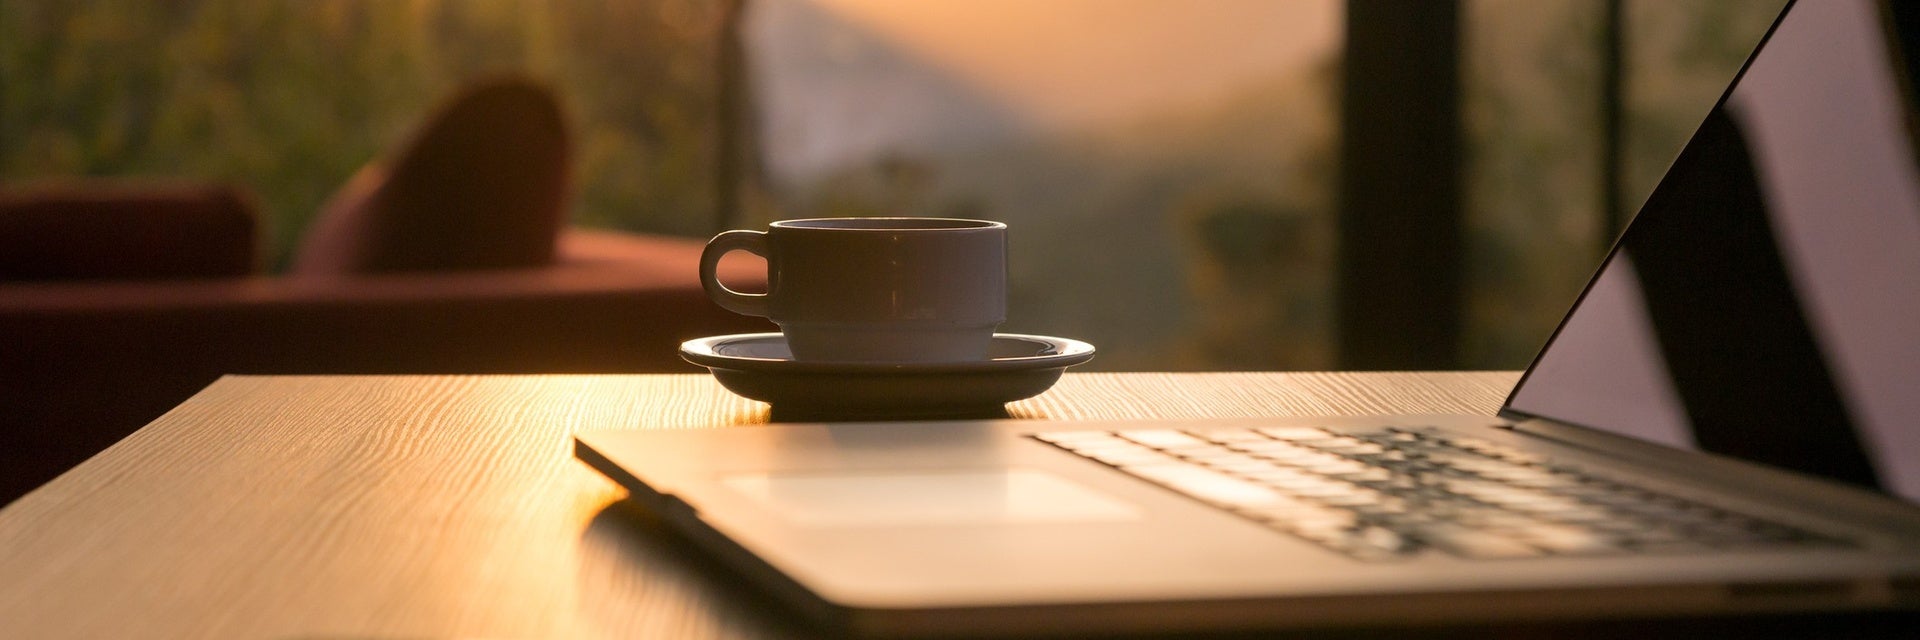 Coffee laptop sunset